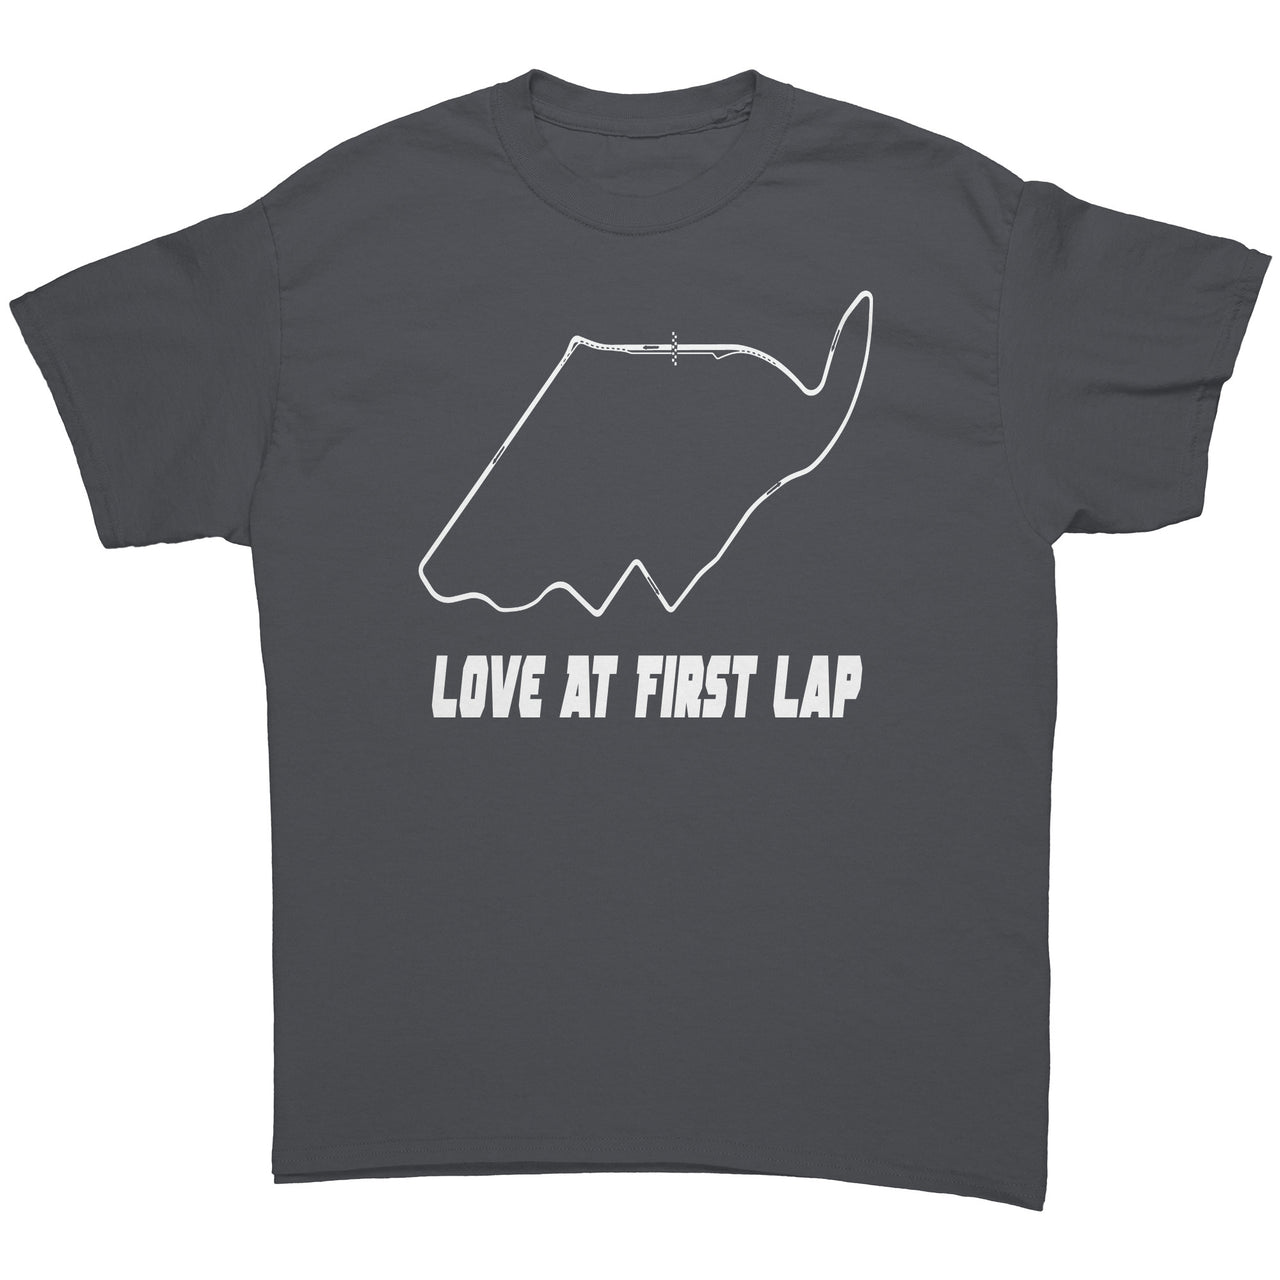 race track t-shirts